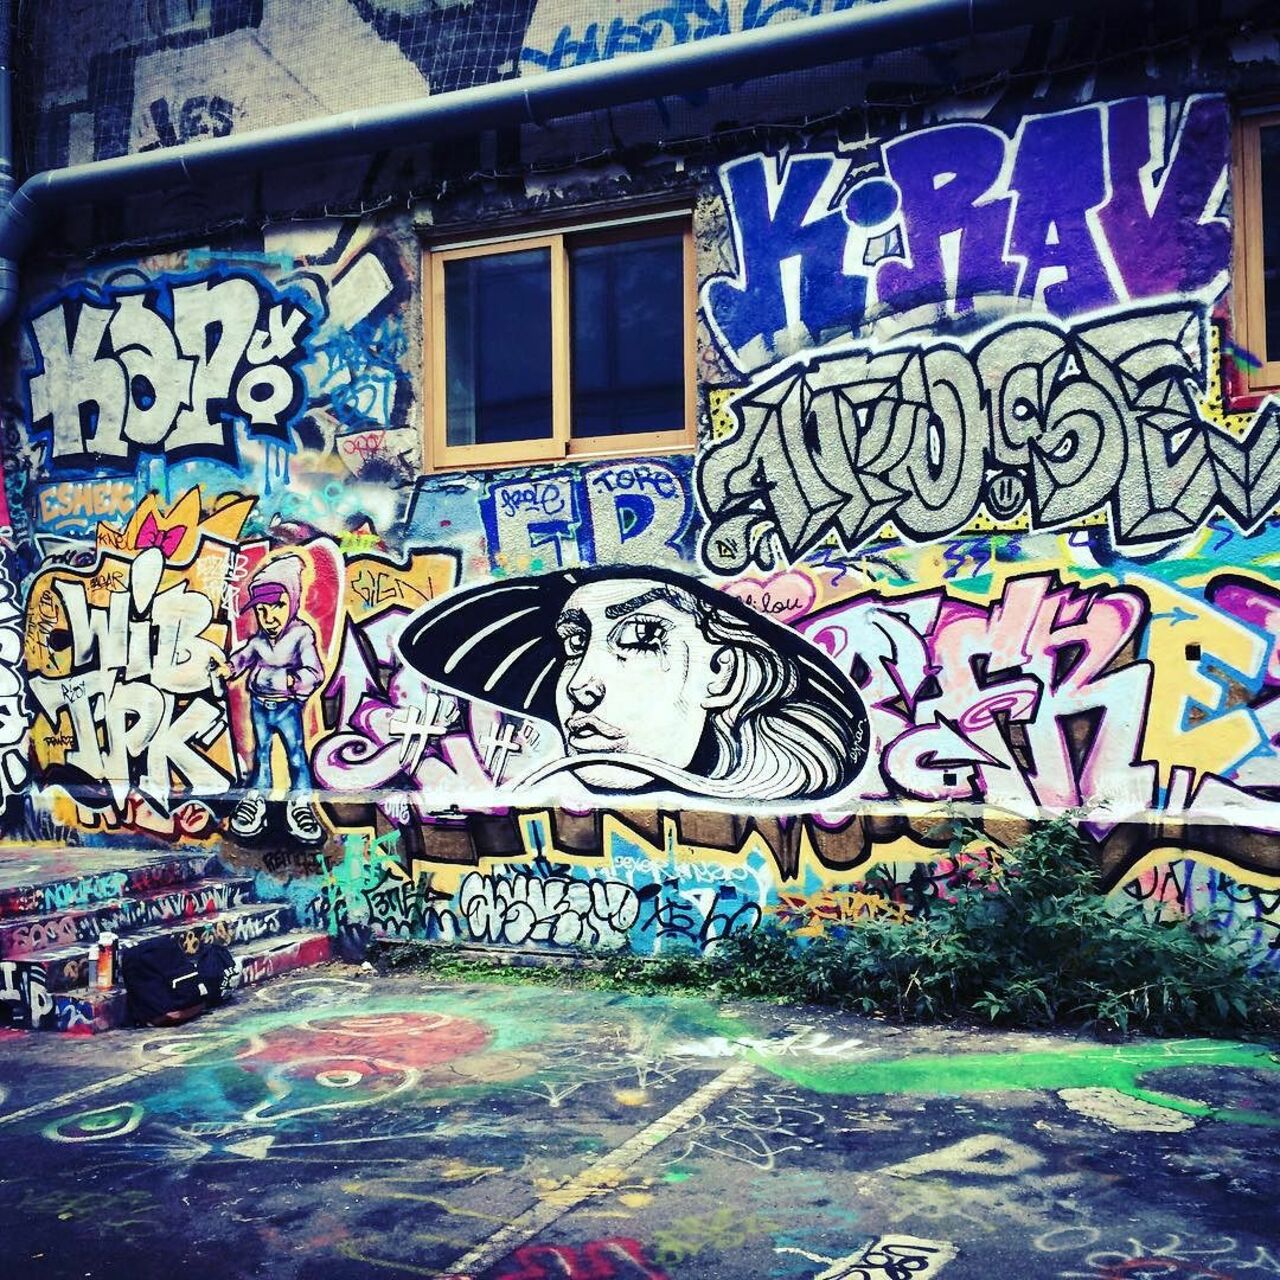 circumjacent_fr: #Paris #graffiti photo by art_by_espa http://ift.tt/1OL5IkA #StreetArt https://t.co/qJ5YLSsc0B